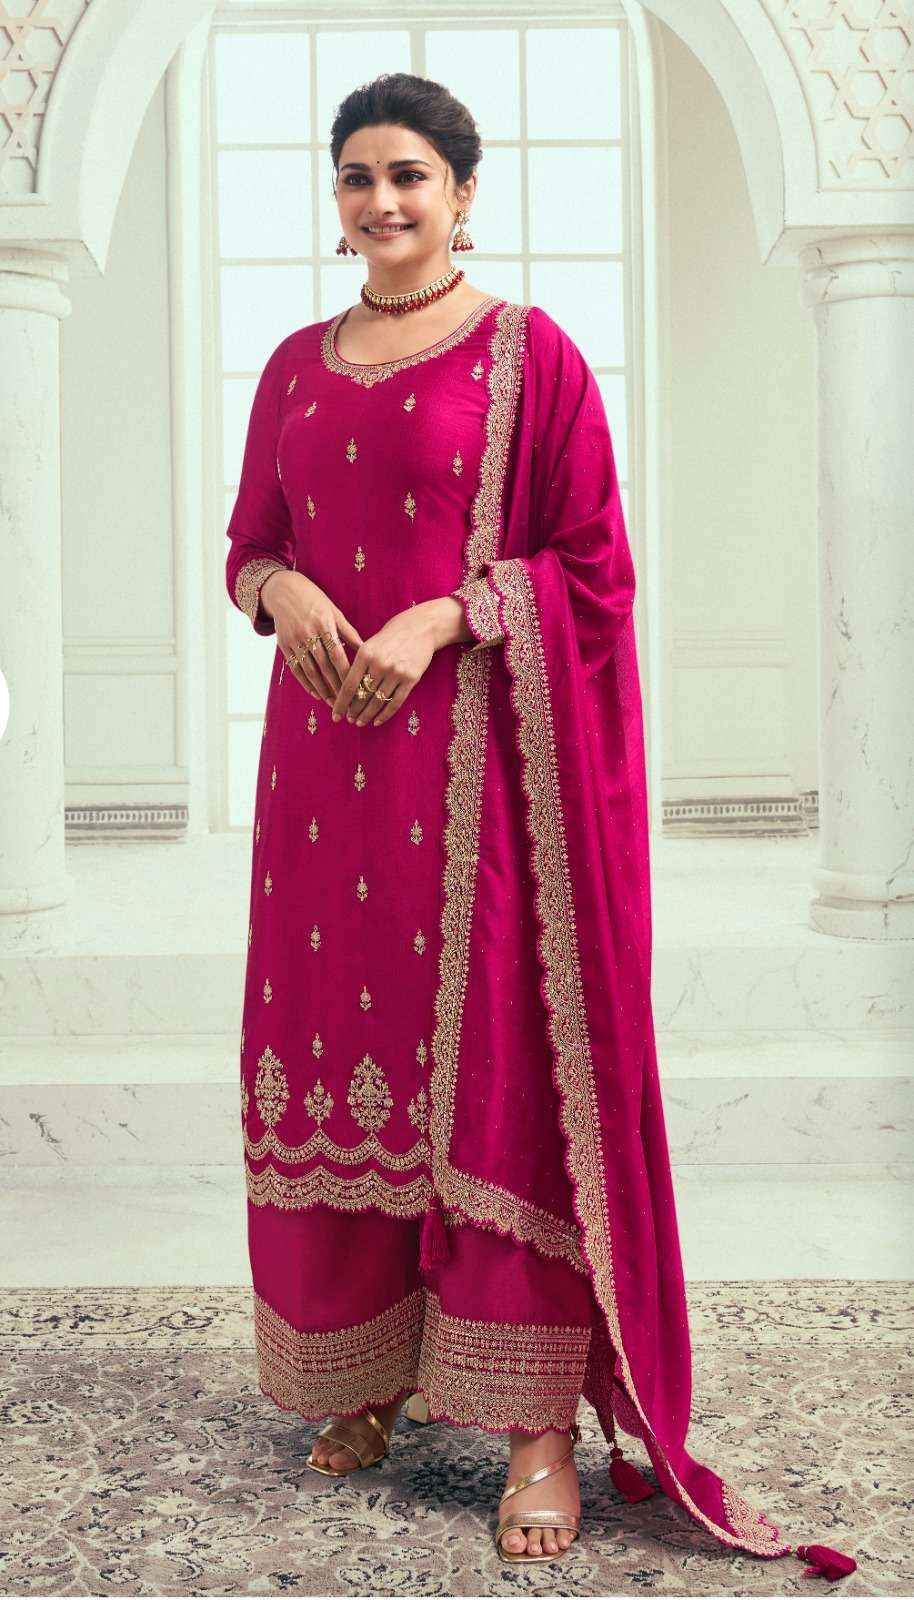 Vinay Kuleesh Shaheen Vol 7 Silk Georgette Dress Material 6 pcs Catalogue